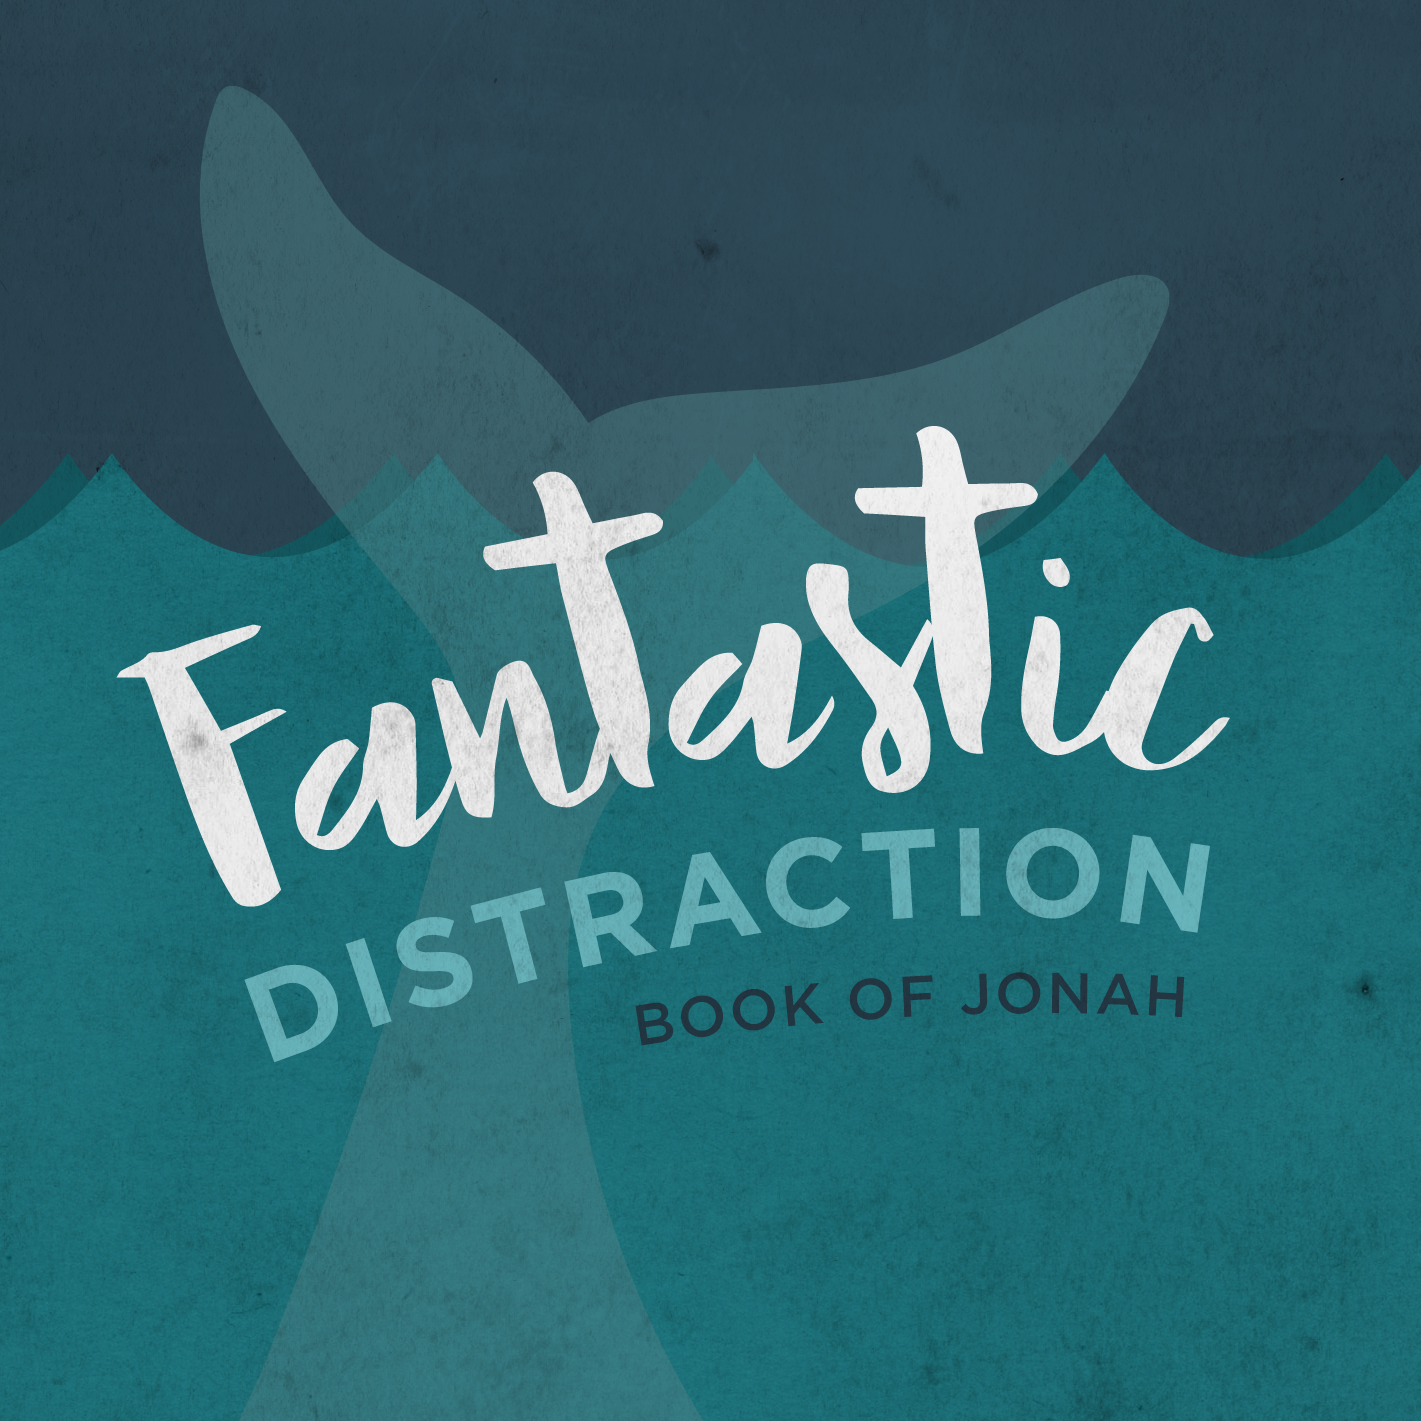 Book of Jonah: Fantastic Distraction